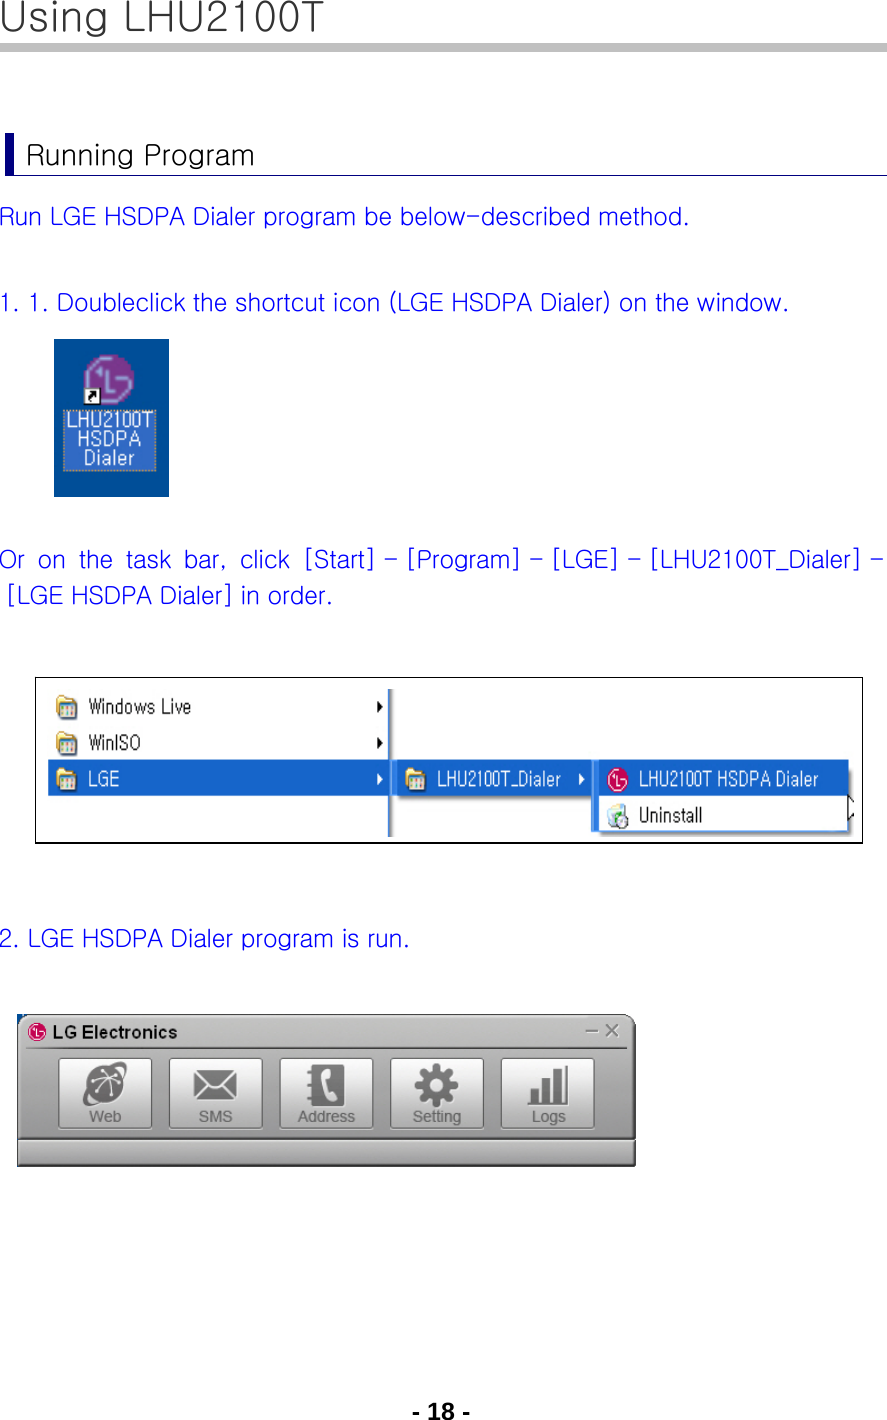 - 18 - Using LHU2100T  Running Program Run LGE HSDPA Dialer program be below-described method.  1. 1. Doubleclick the shortcut icon (LGE HSDPA Dialer) on the window.      Or  on  the  task  bar,  click  [Start] - [Program] - [LGE] - [LHU2100T_Dialer] - [LGE HSDPA Dialer] in order.        2. LGE HSDPA Dialer program is run.           